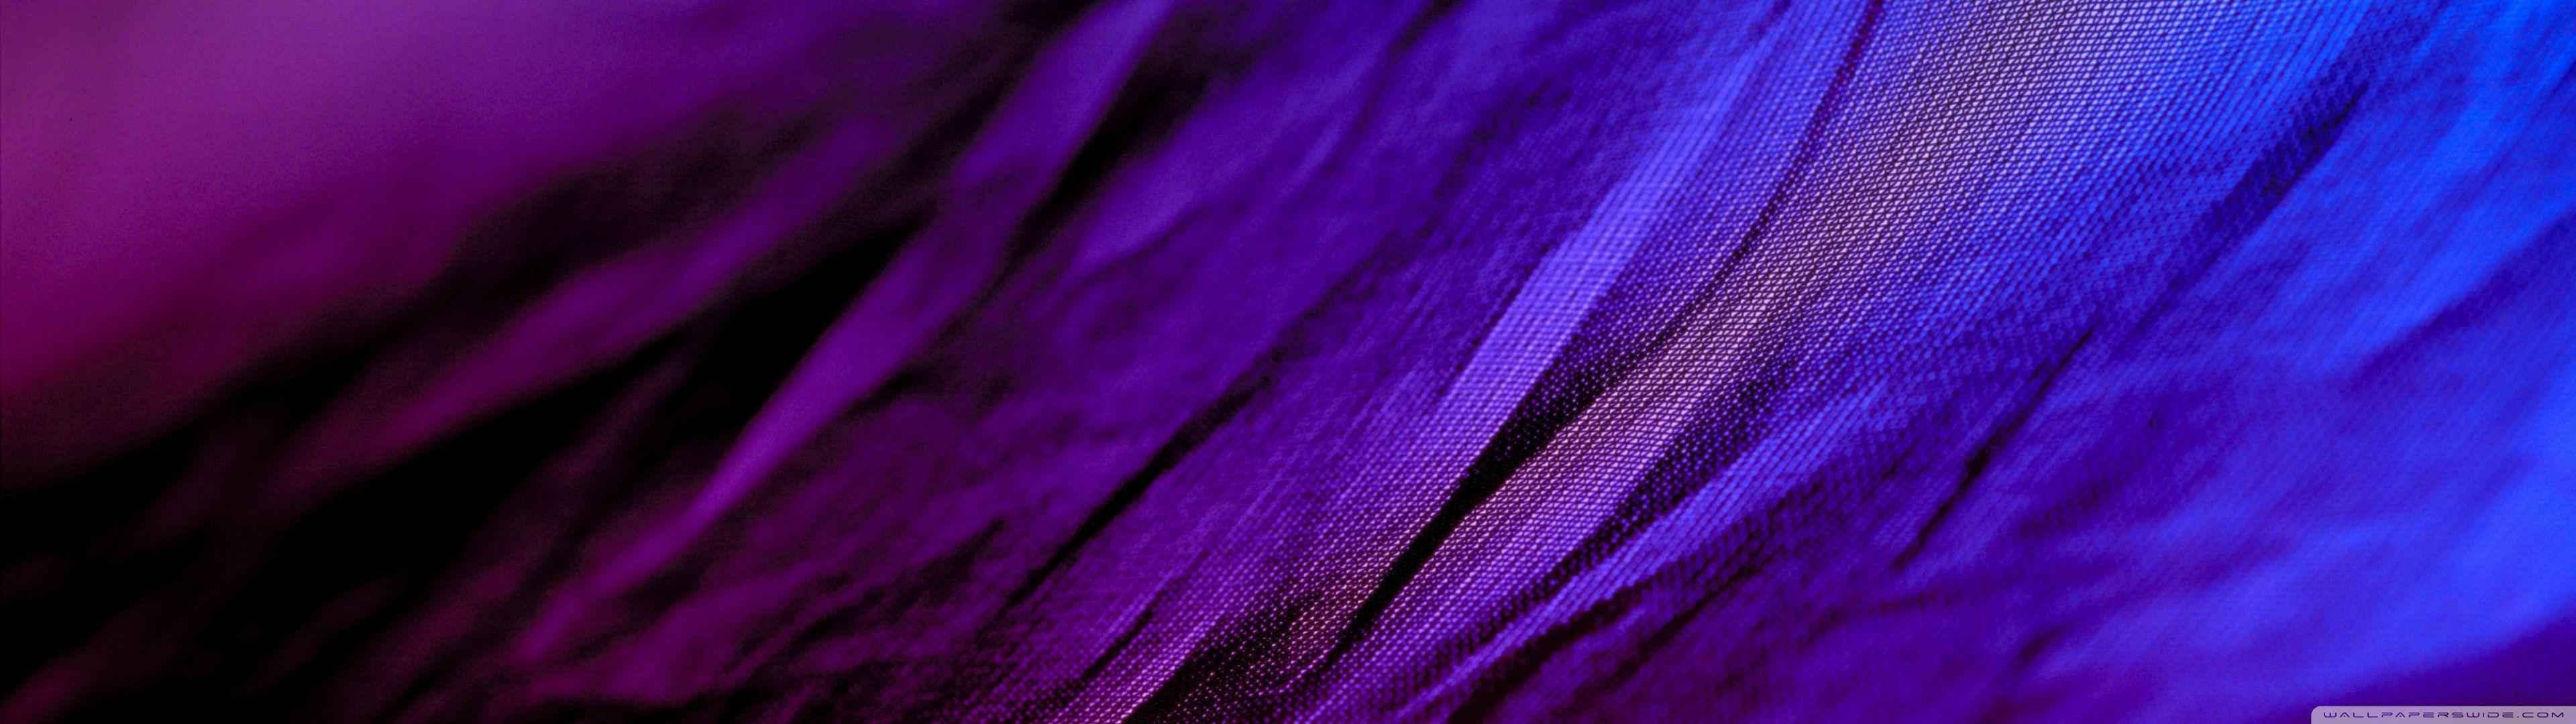 Purple 3840x1080 Wallpapers - Top Free Purple 3840x1080 Backgrounds ...